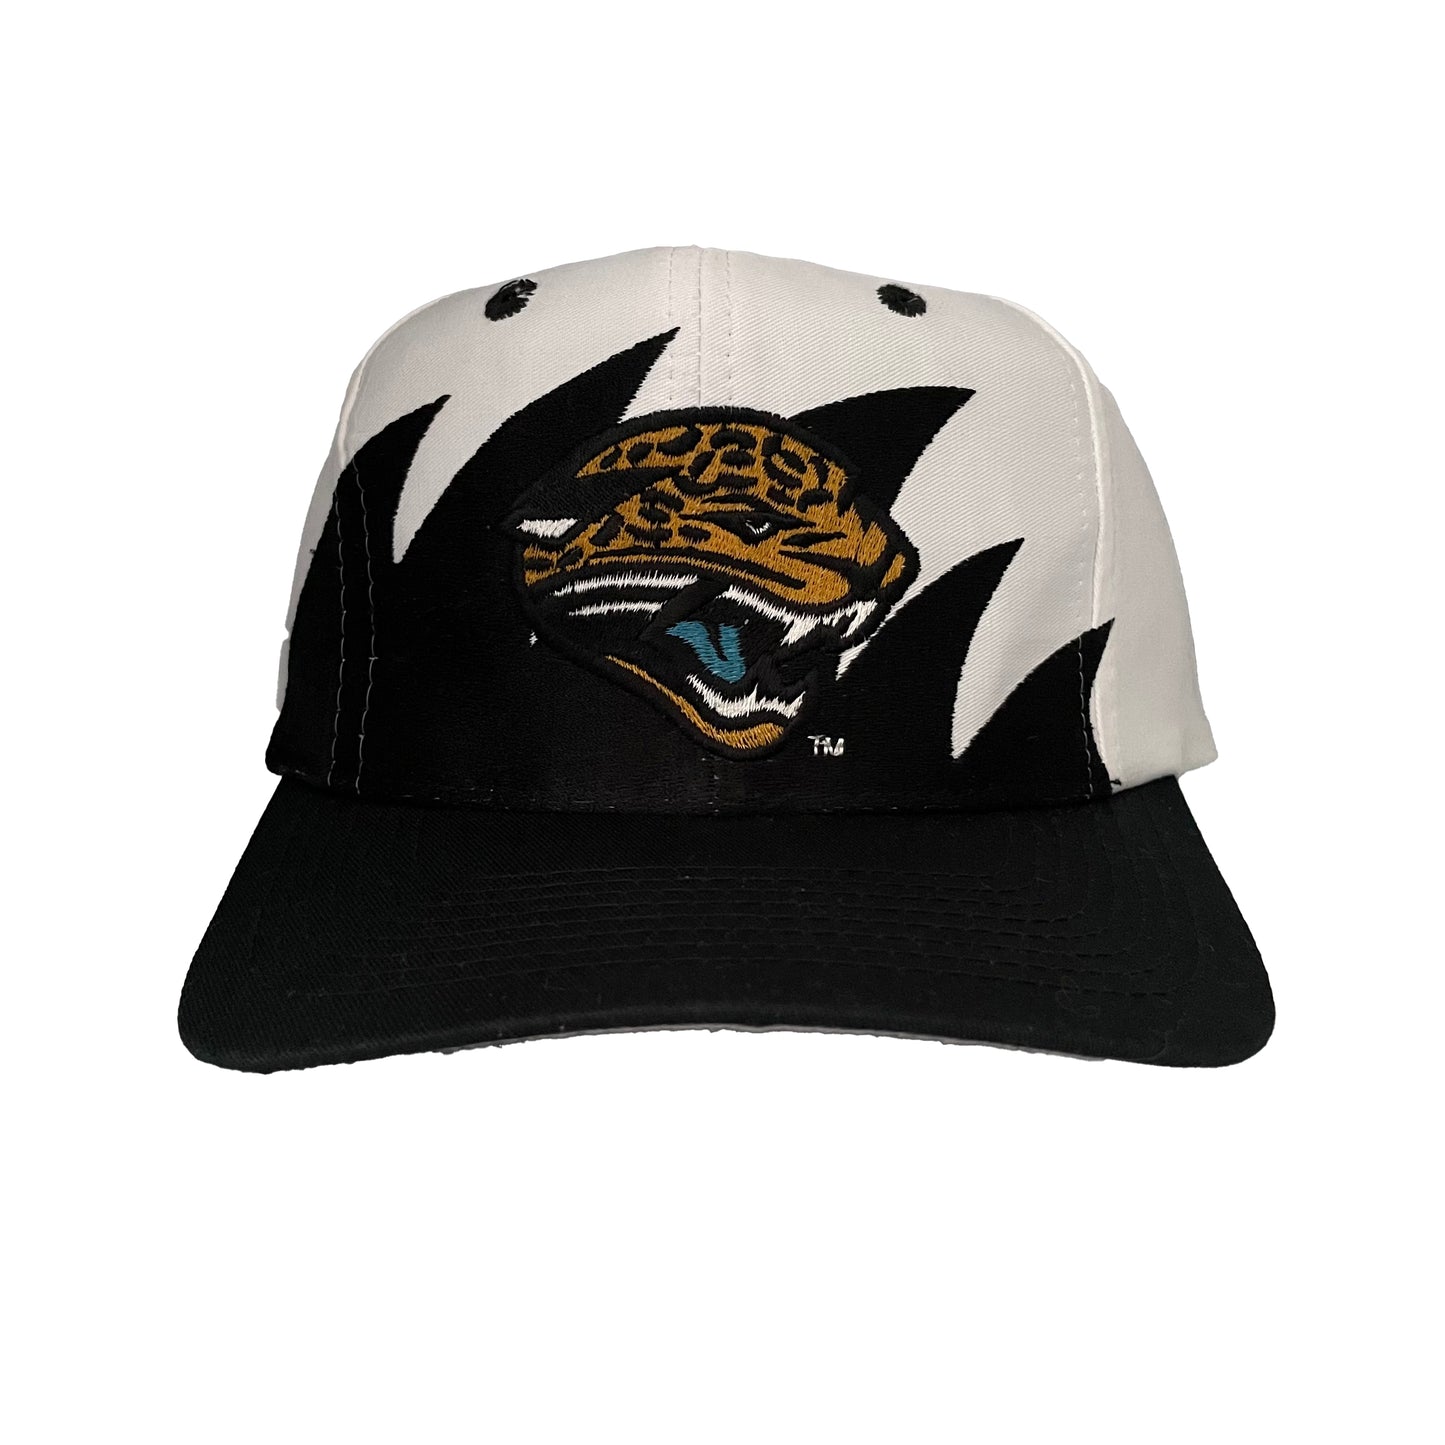 Jacksonville Jaguars LOGO 7 "Sharktooth" hat (RARE)